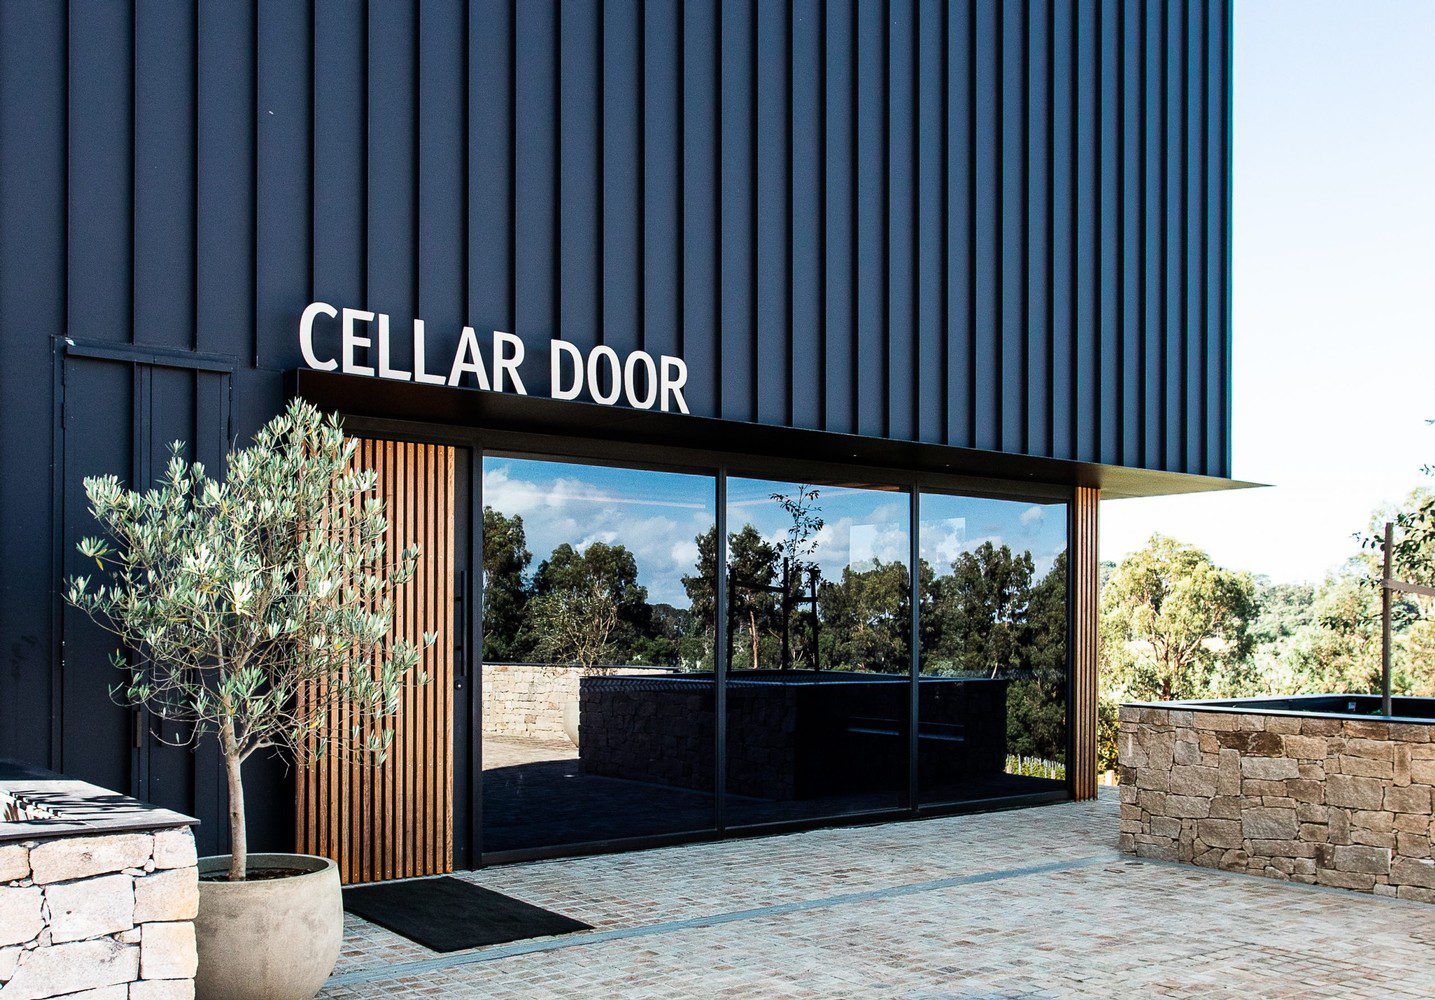 The premium cellar door Ten Minutes by Tractor mornington peninsula